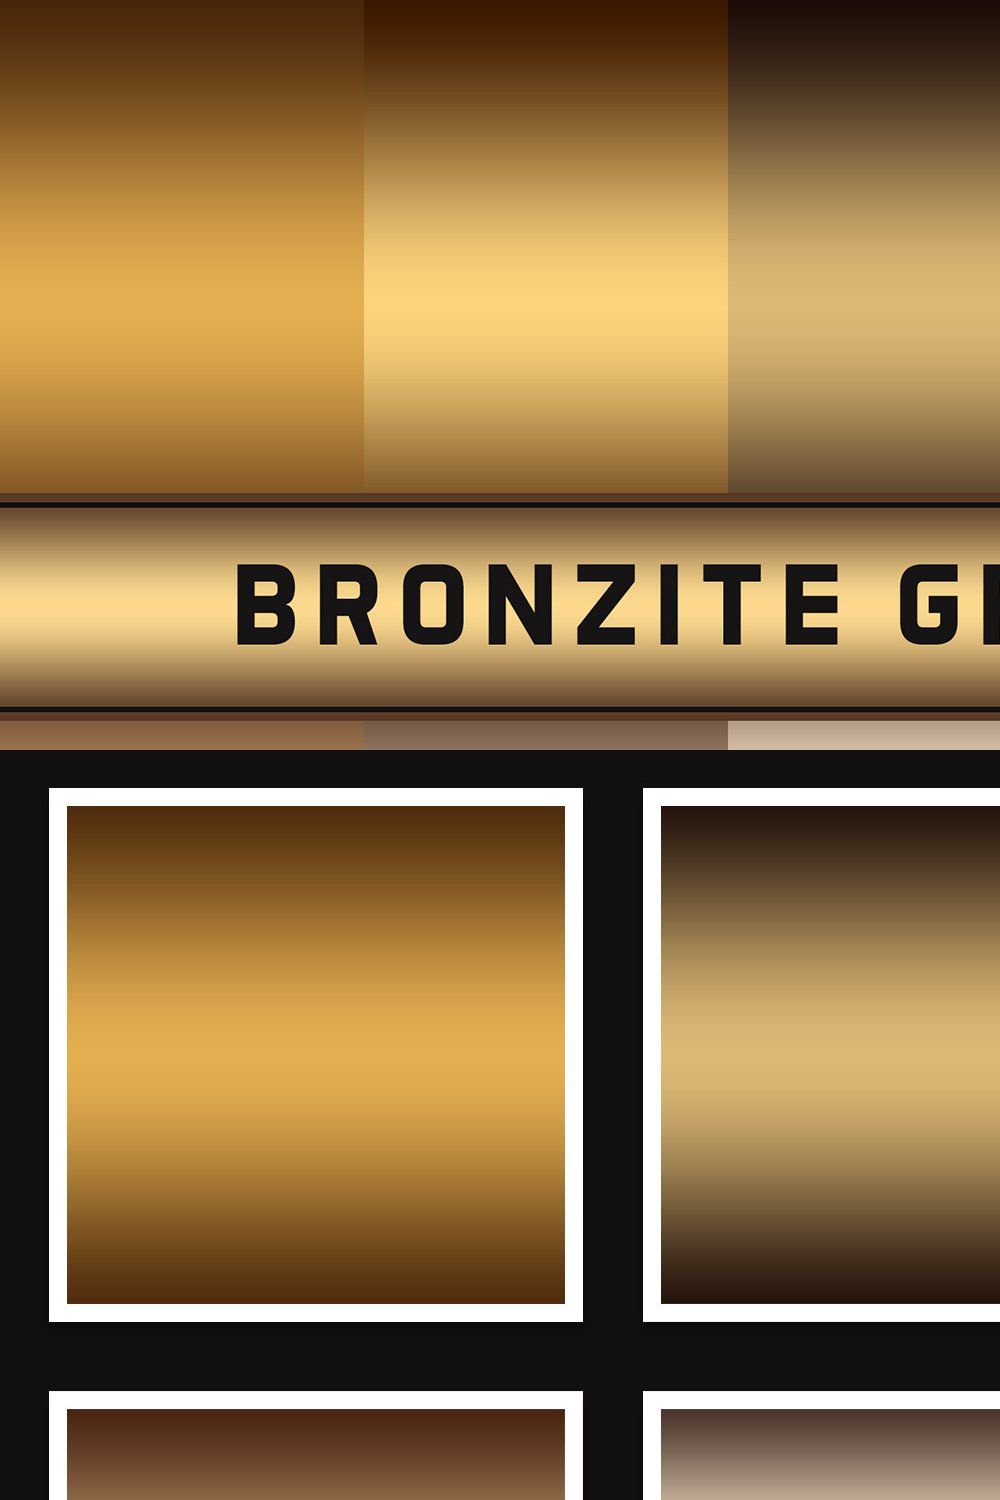 Bronzite Gradients pinterest preview image.